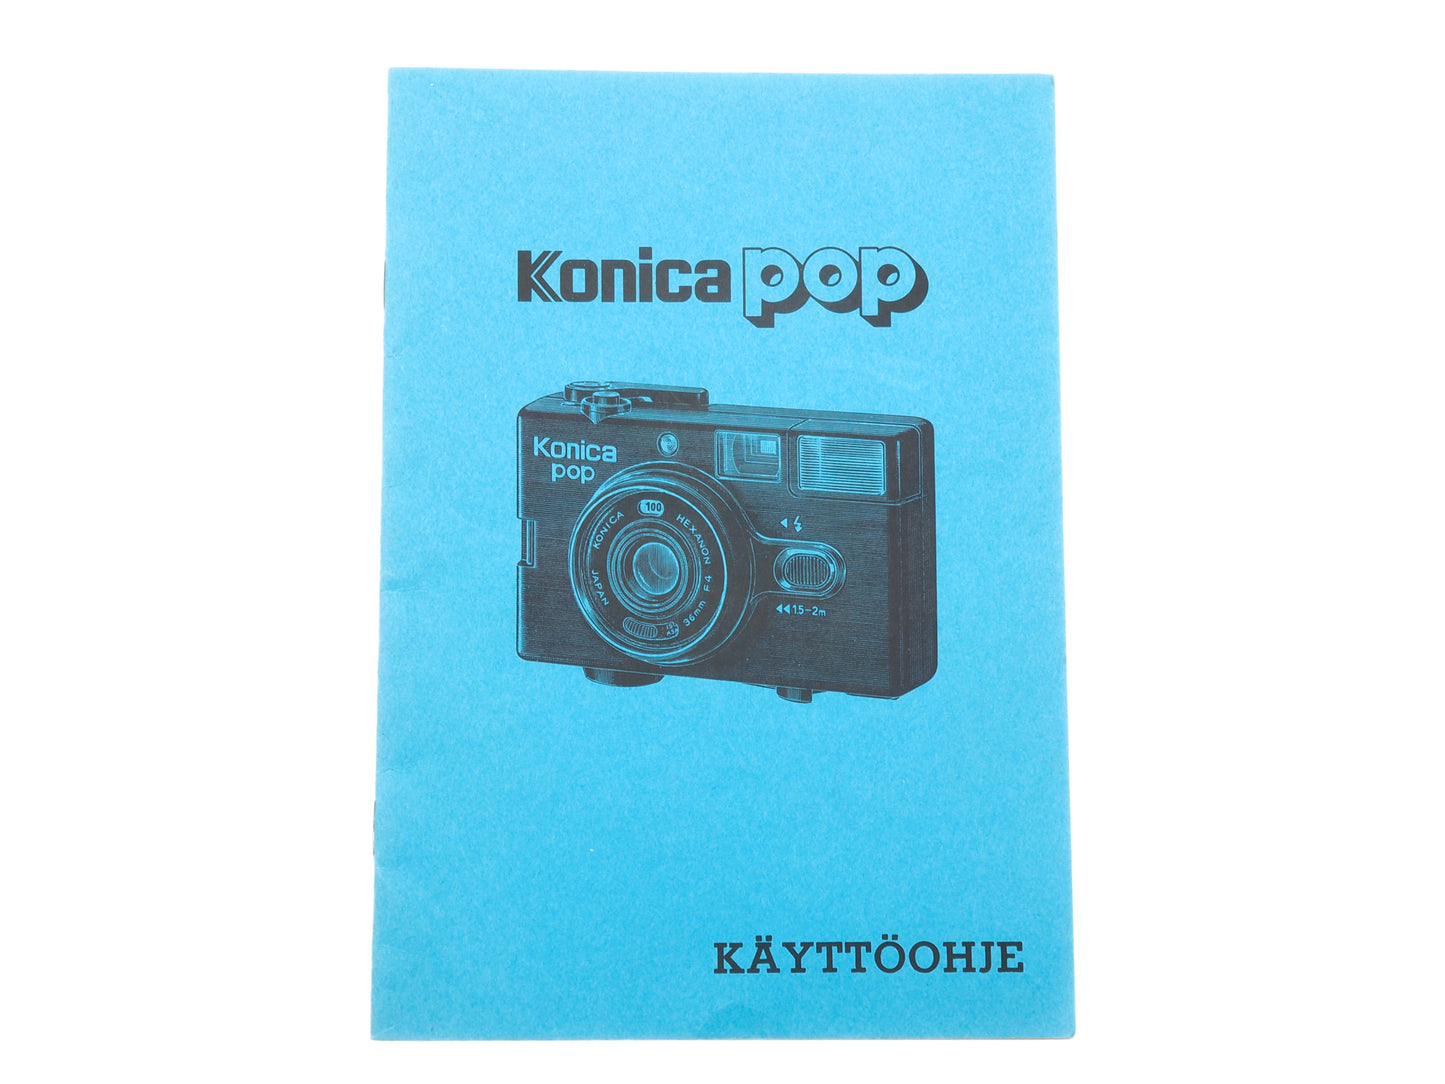 Konica Pop Instructions